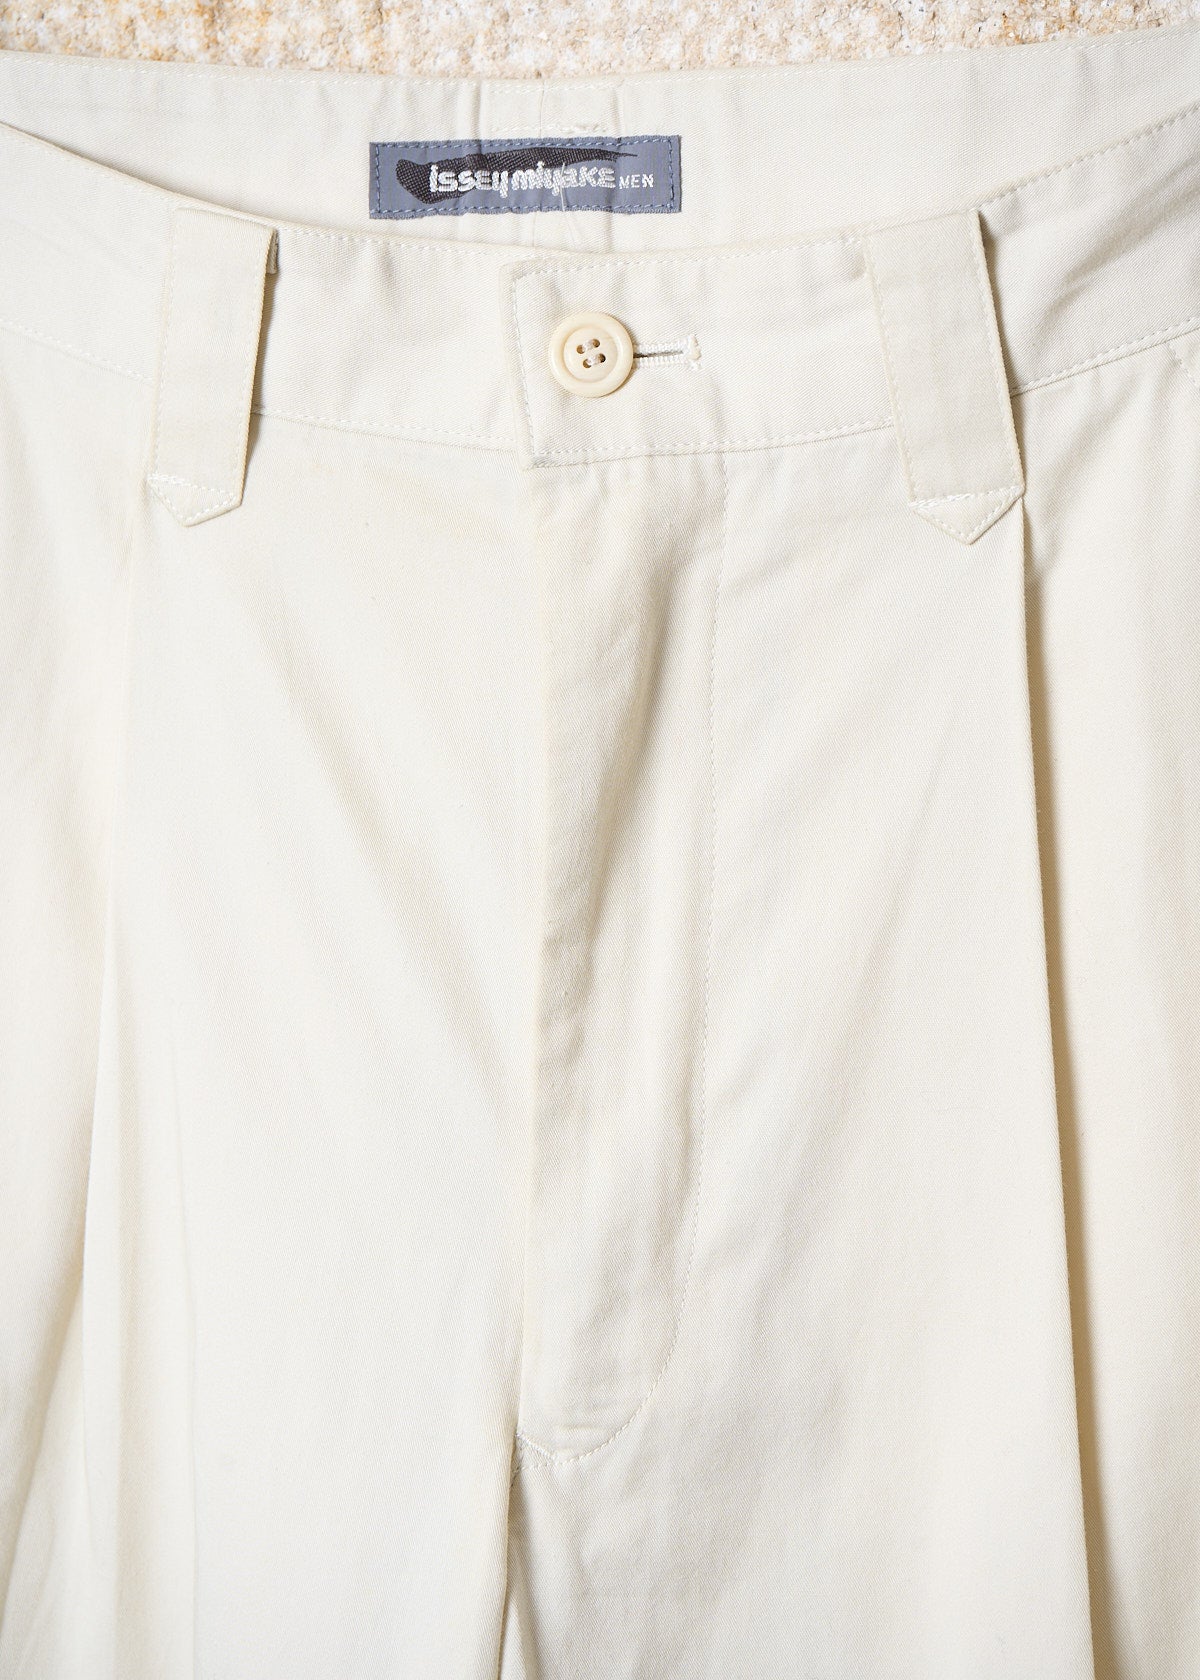 White Cotton Zip Modulable Pants 1980's - Small